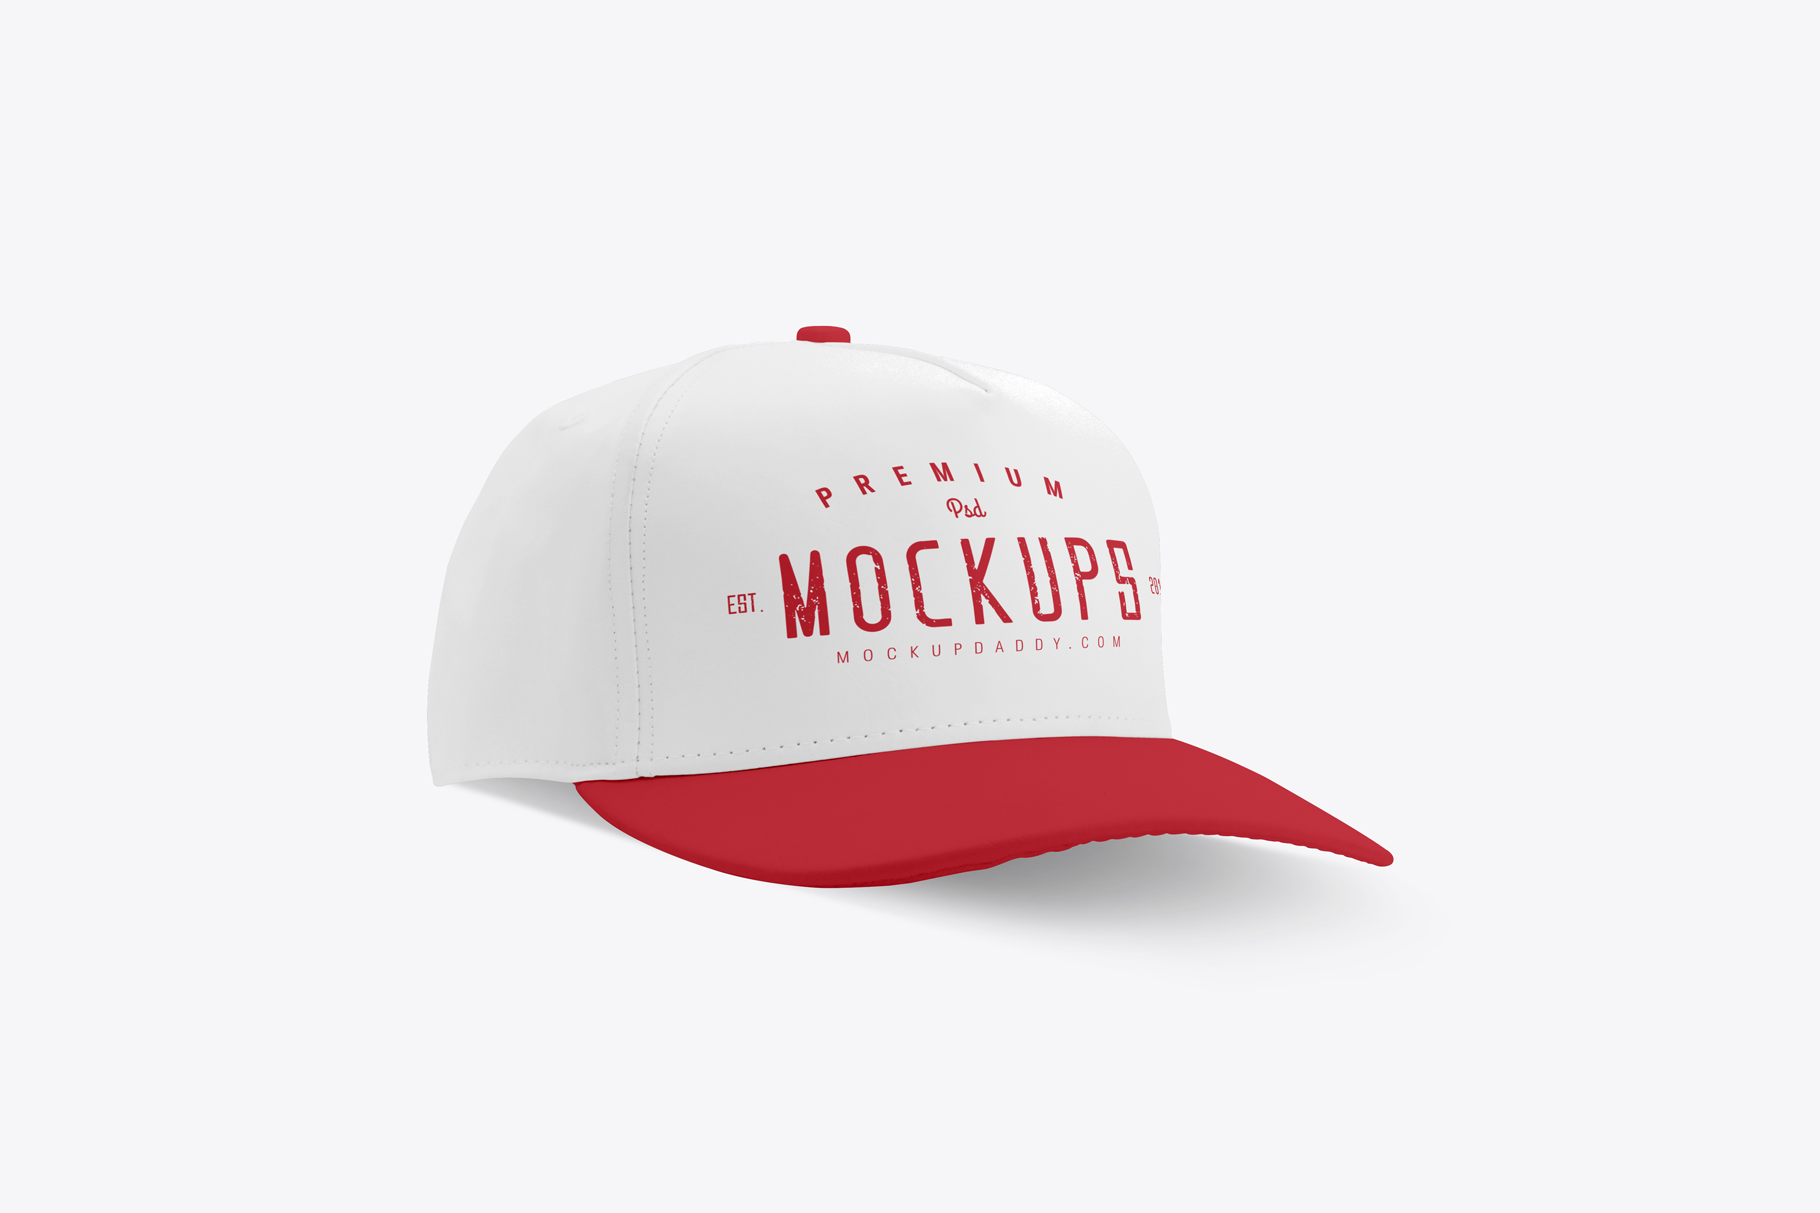 Cap Mockup - Mockup Daddy